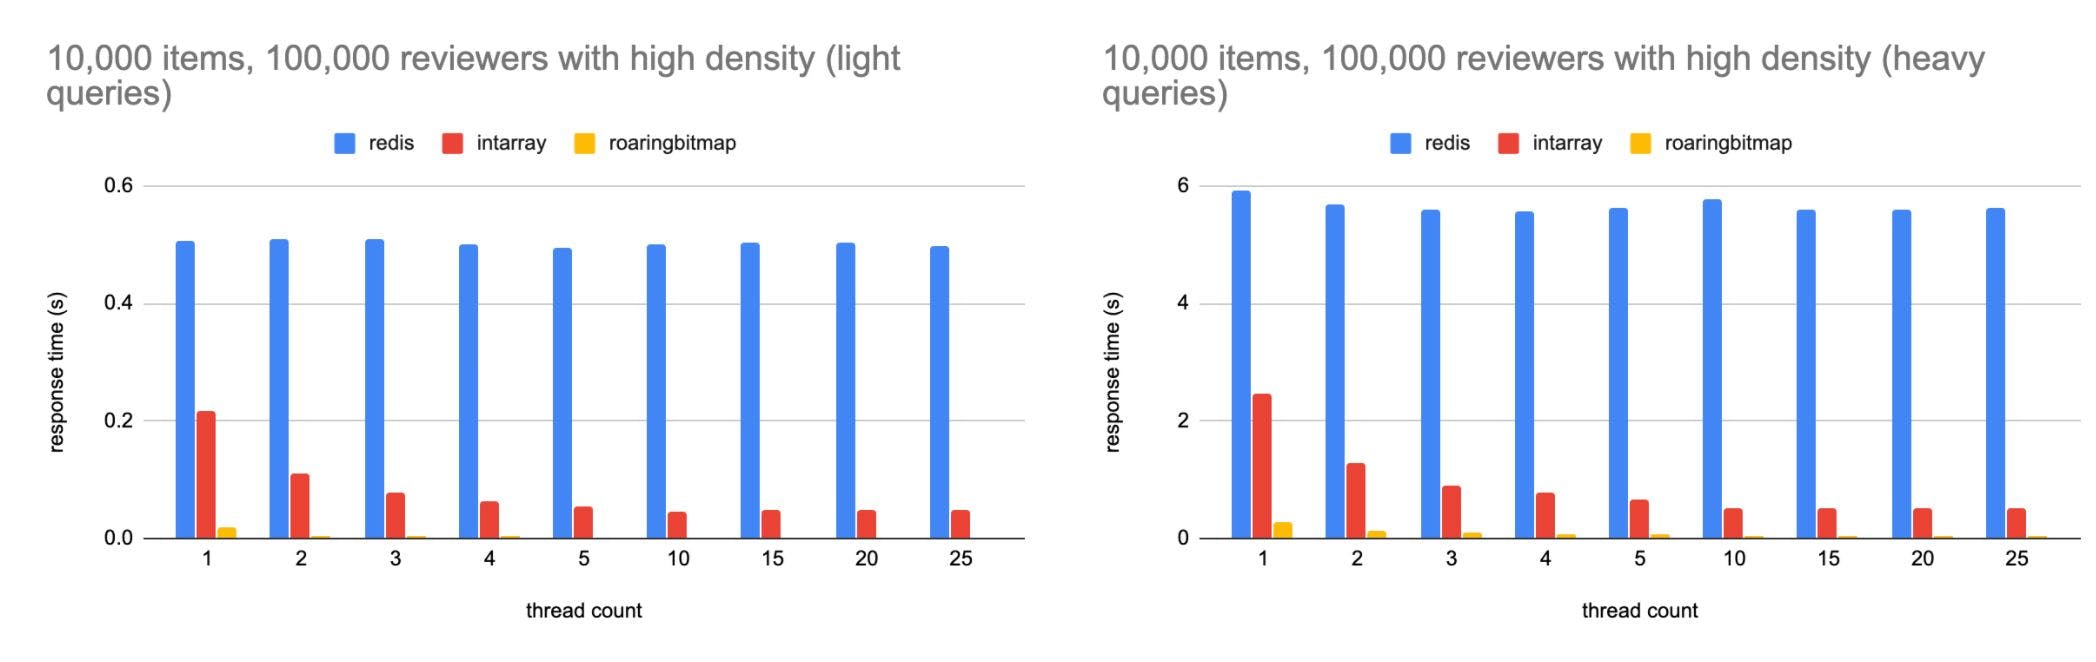 Bar graph showing response time for 10,000 medium sized sets using roaring bitmap